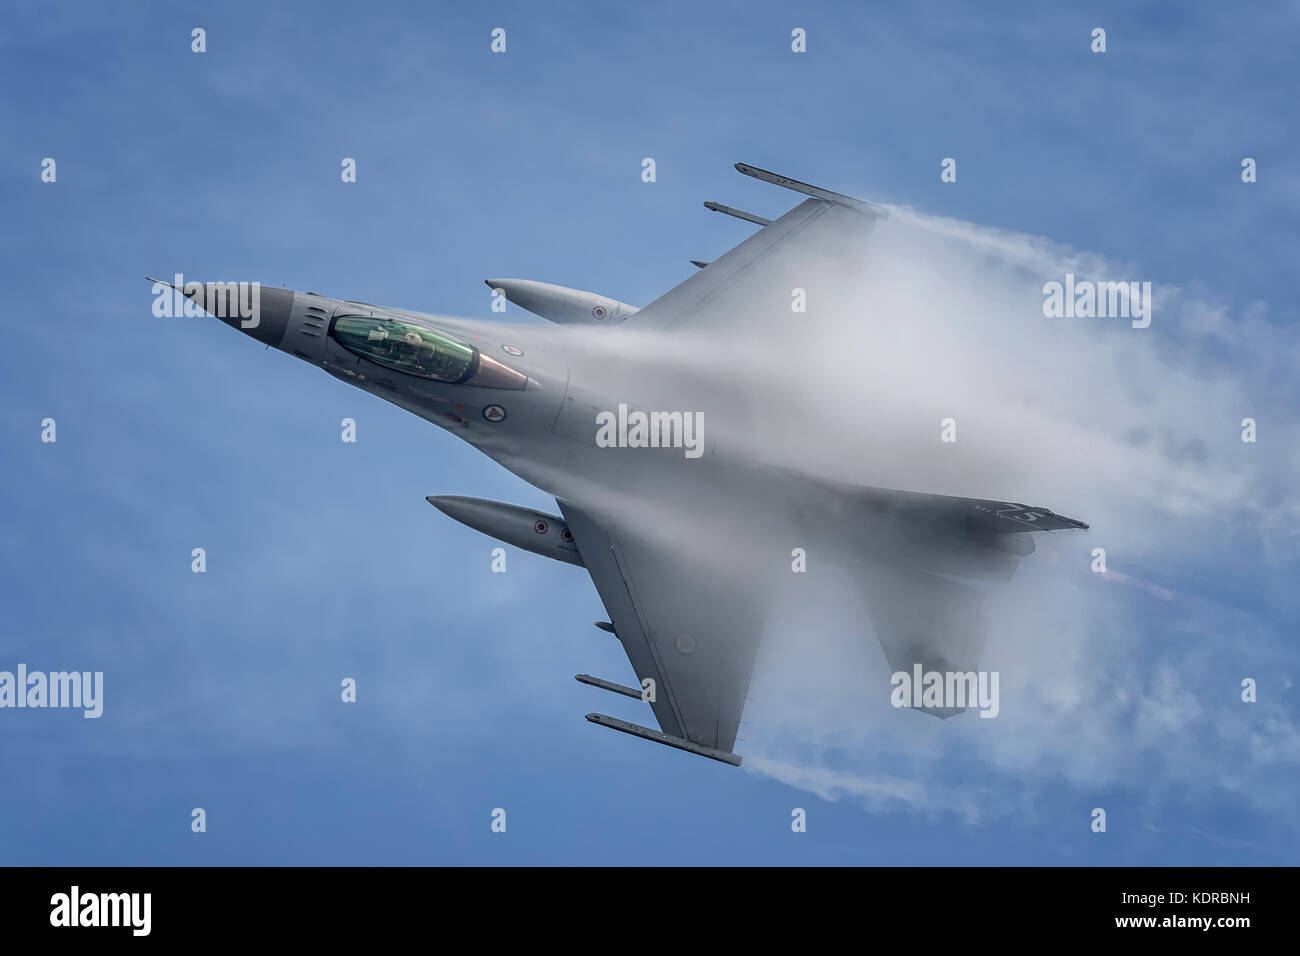 Norwegian air force F-16 high G turn Stock Photo